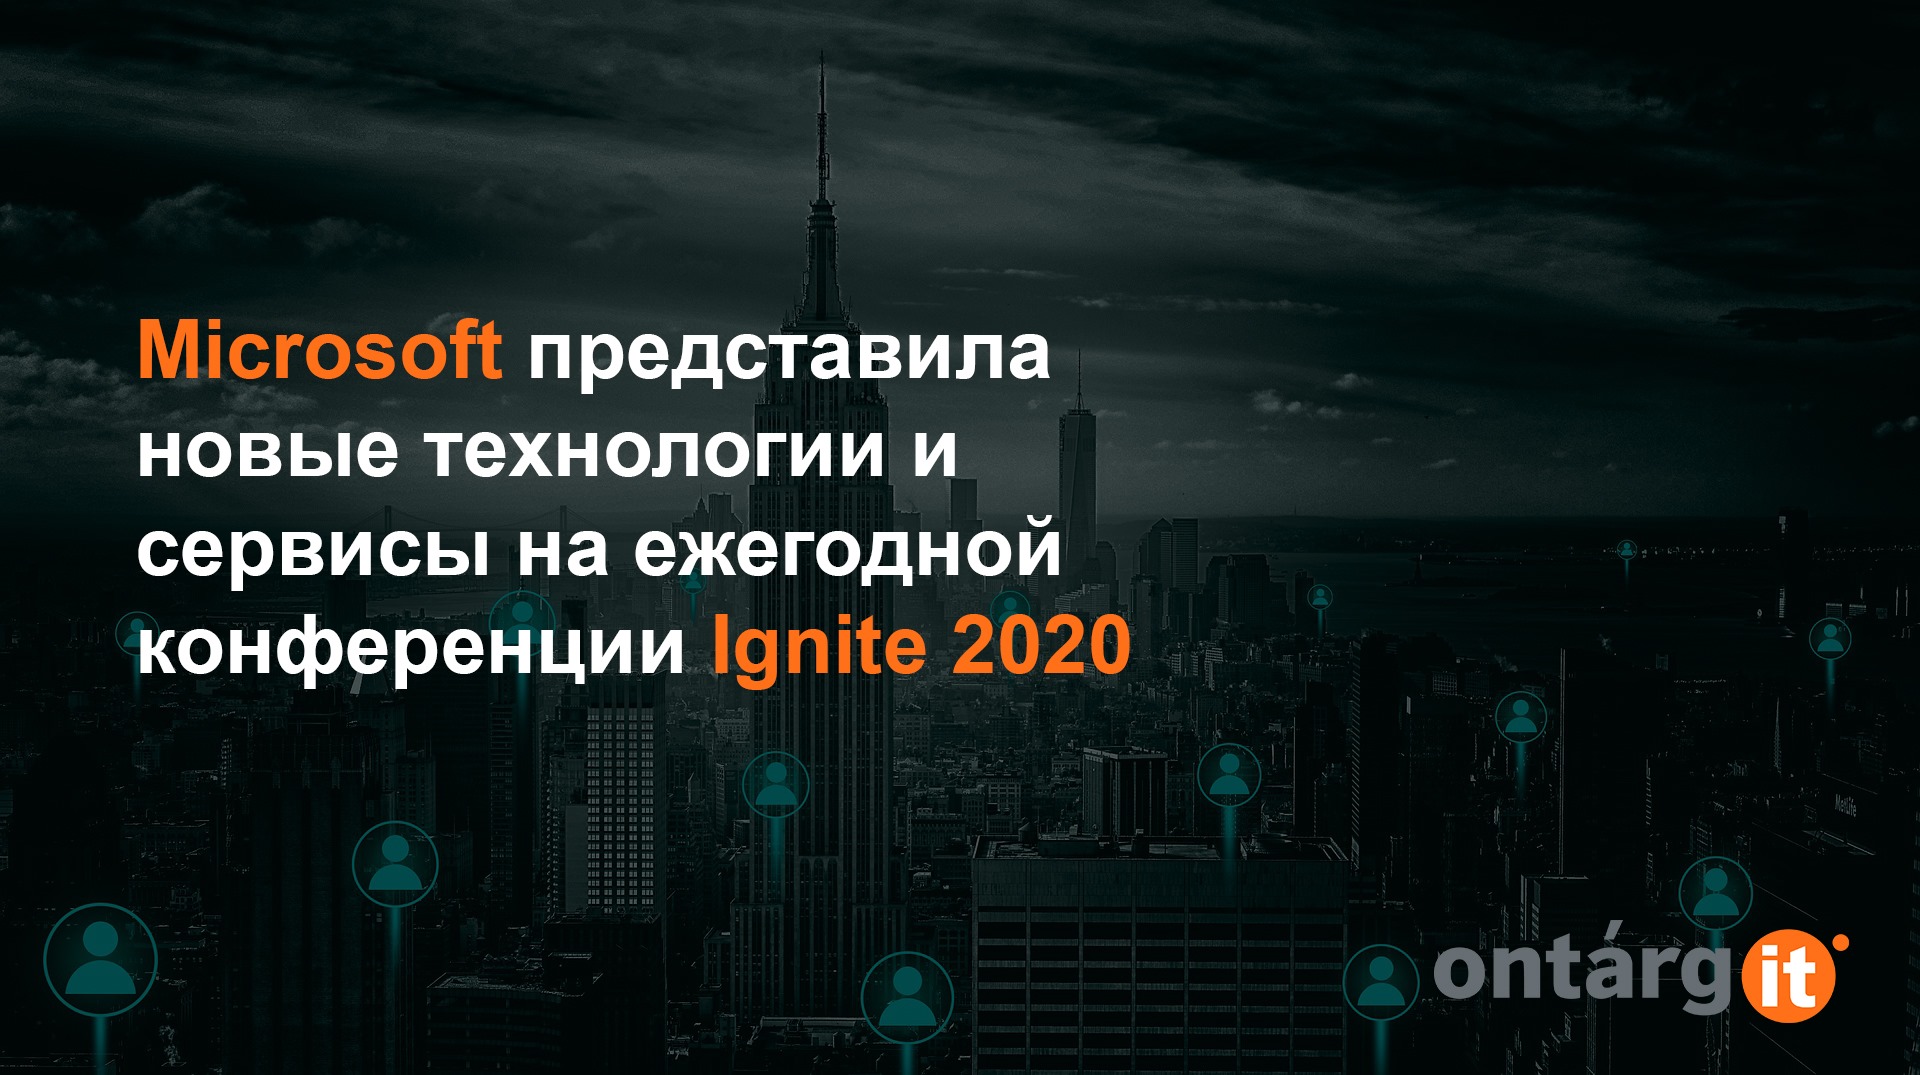 Ignite 2020: Microsoft представила новые технологии и сервисы